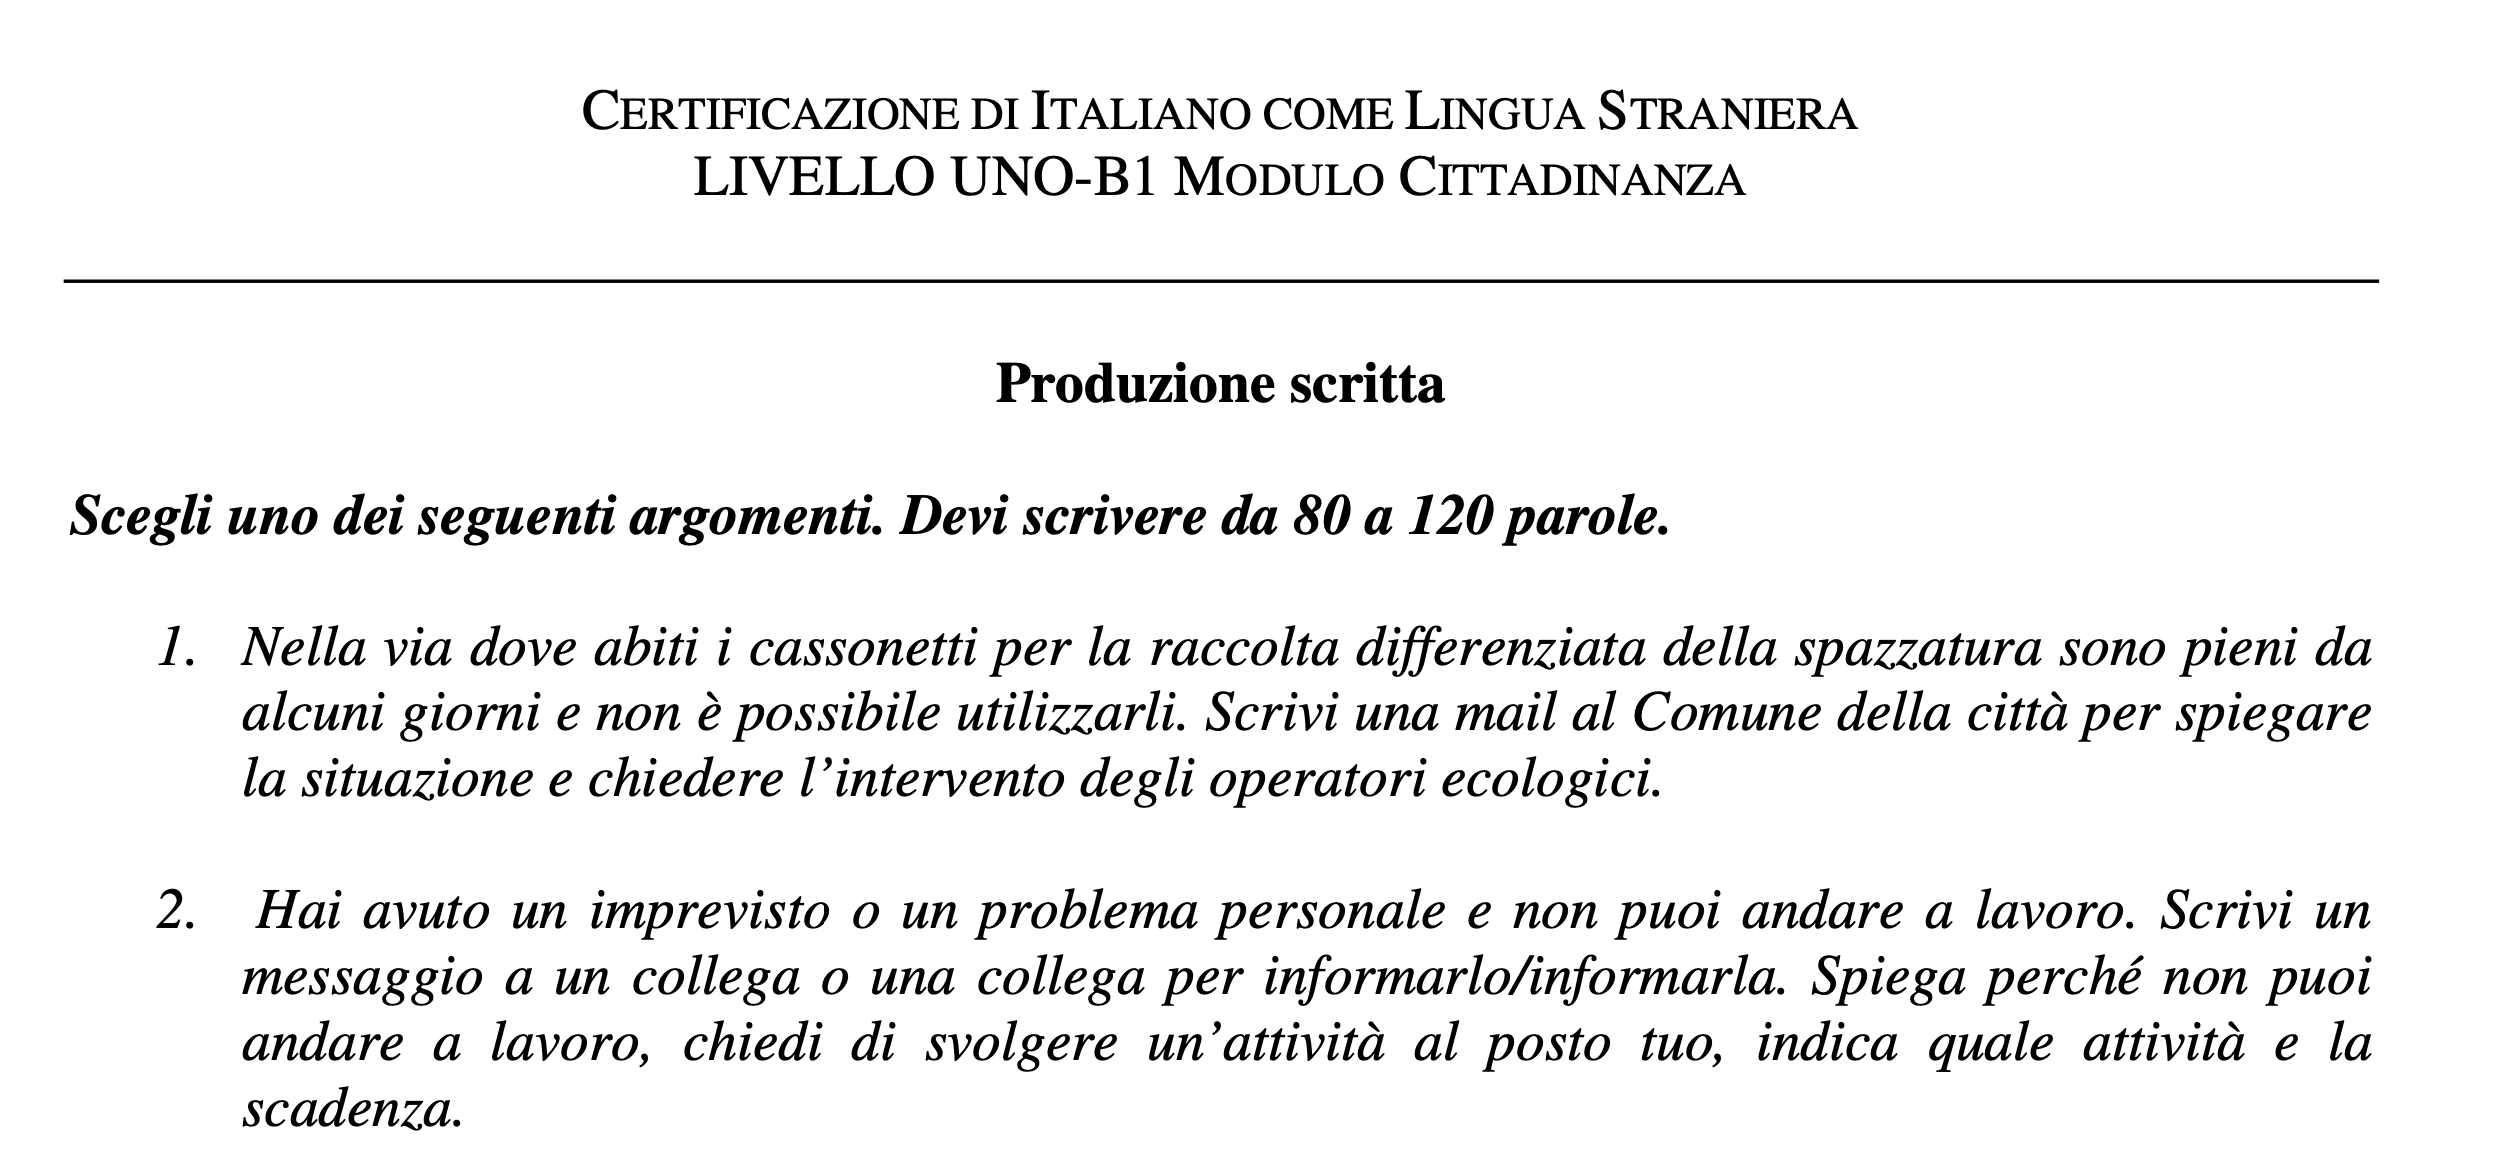 CILS B1 Cittadinanza (Citizenship): Writing Part - Smart Italian